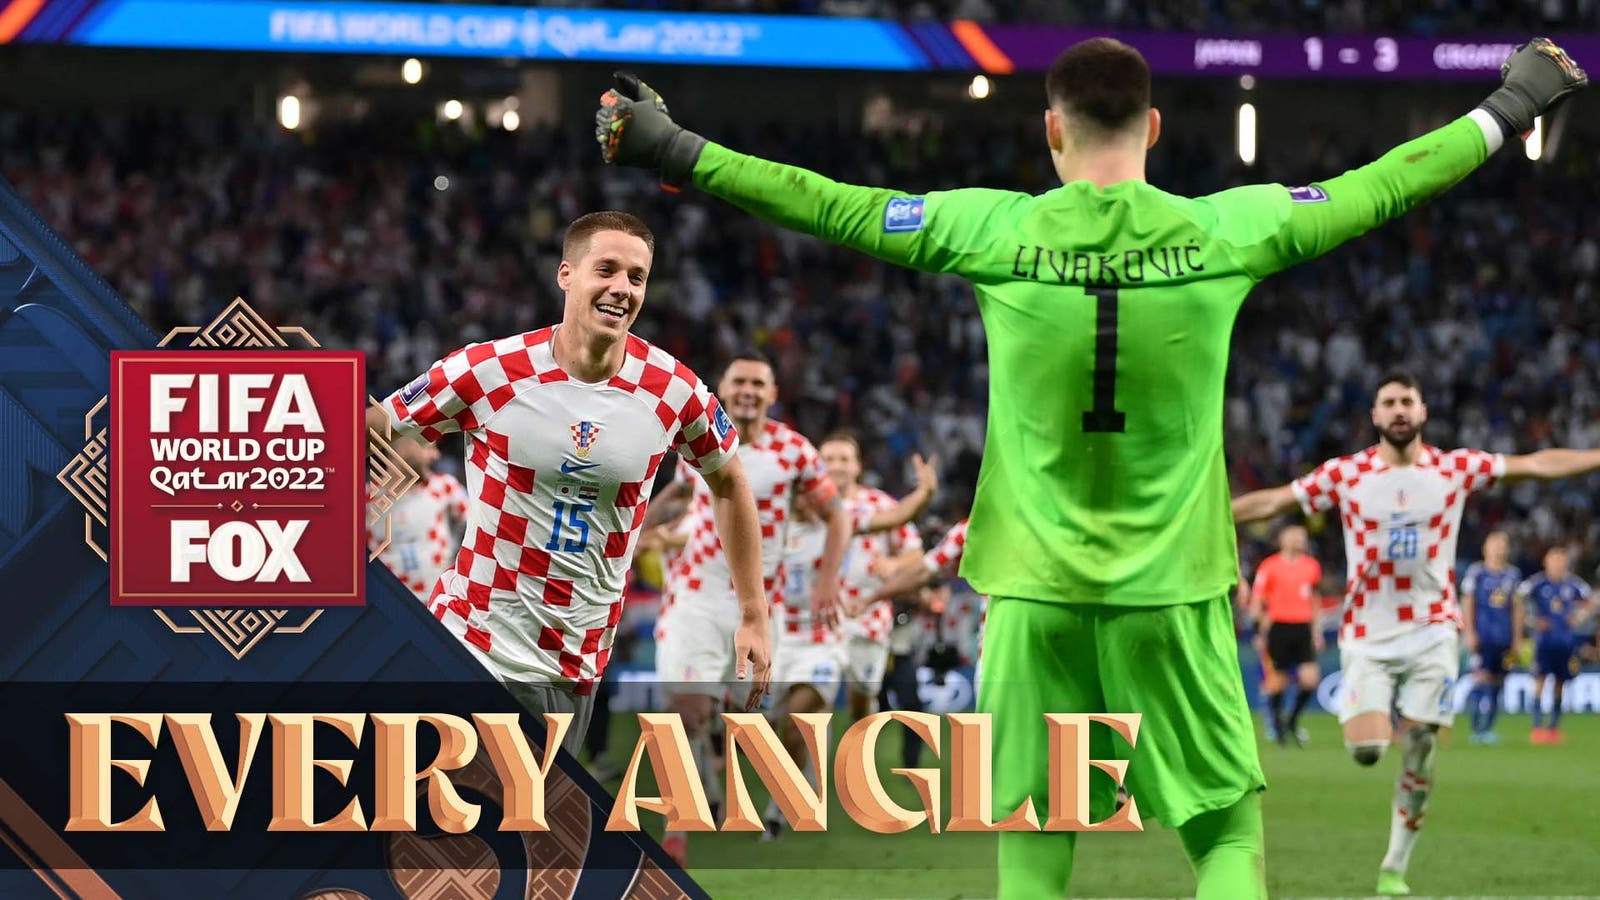 Croatia's Dominik Livakovic KEEPING ANIMAL against Brazil at the 2022 FIFA World Cup |  FOX FOOTBALL